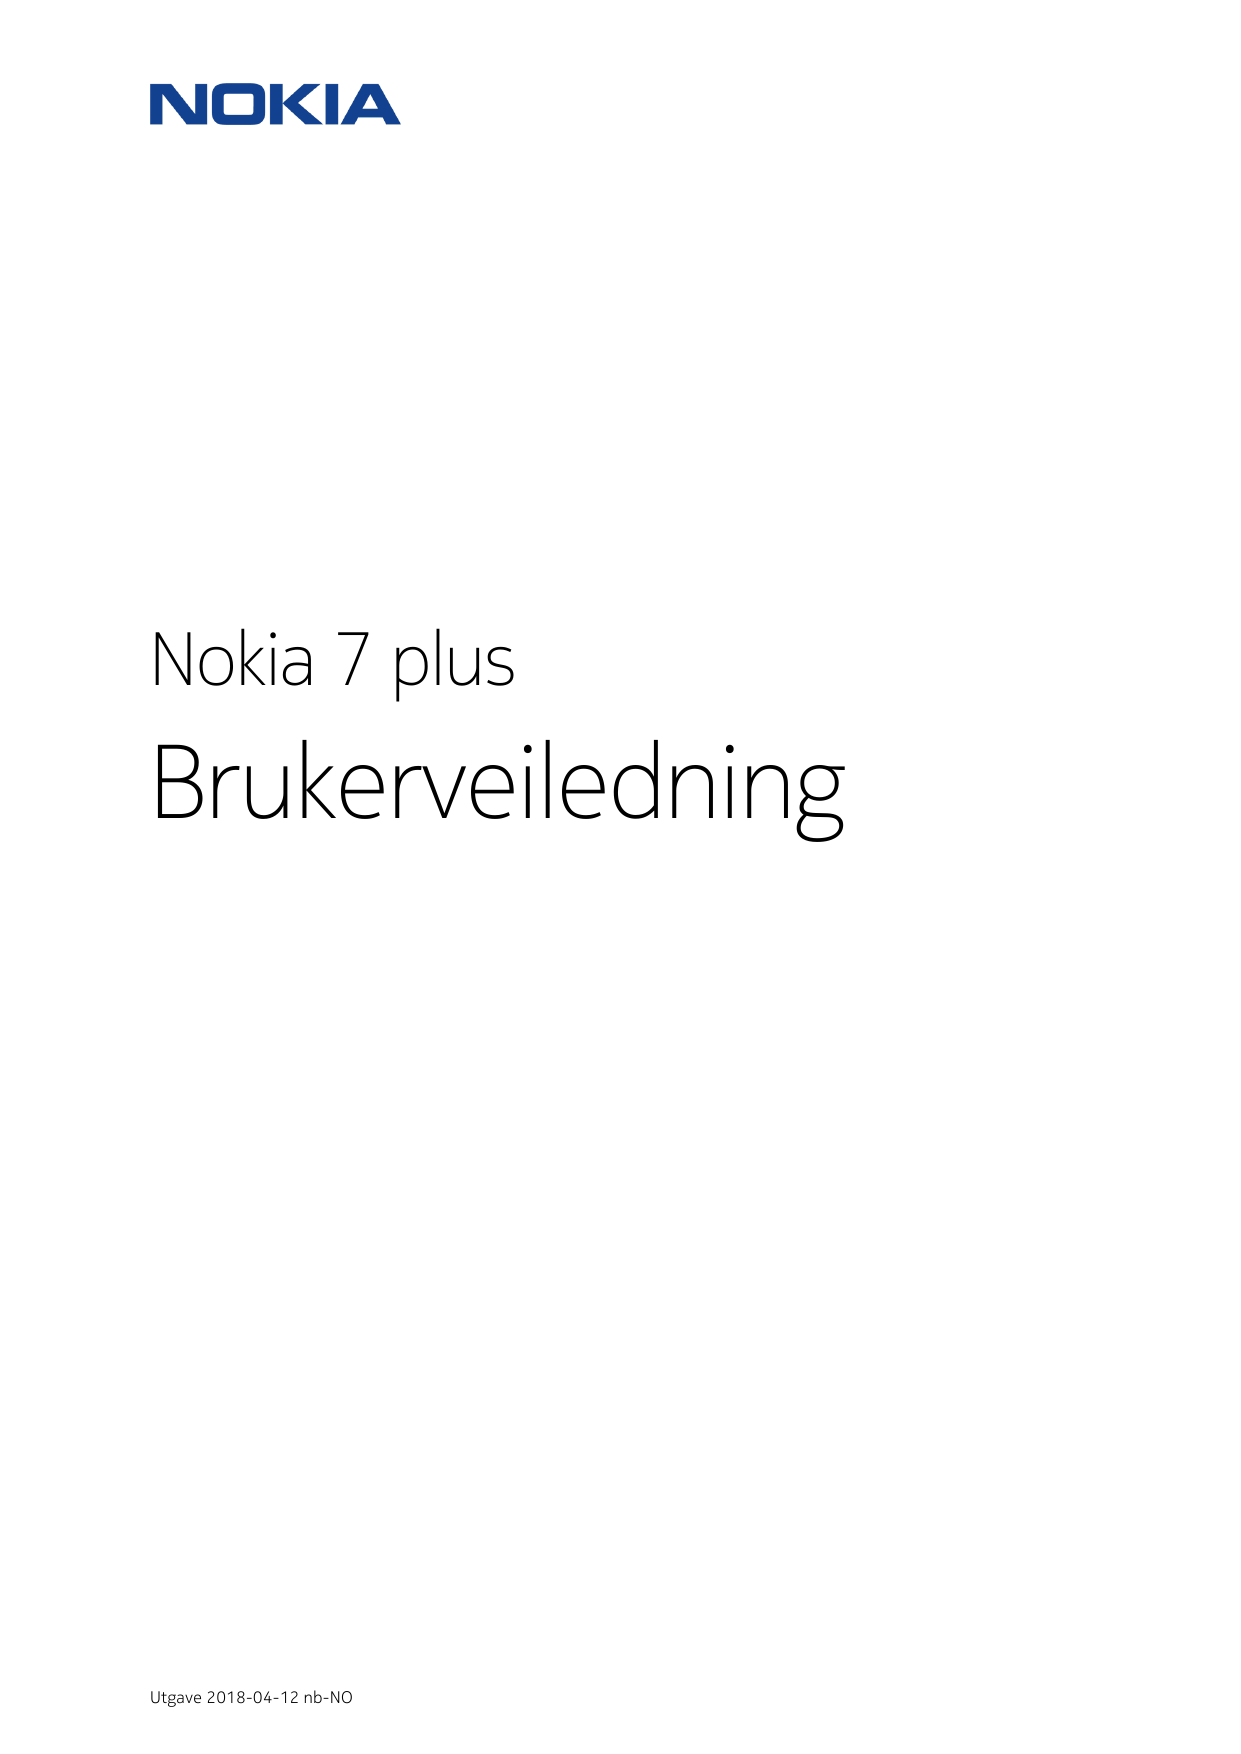 Nokia 7 plusBrukerveiledningUtgave 2018-04-12 nb-NO